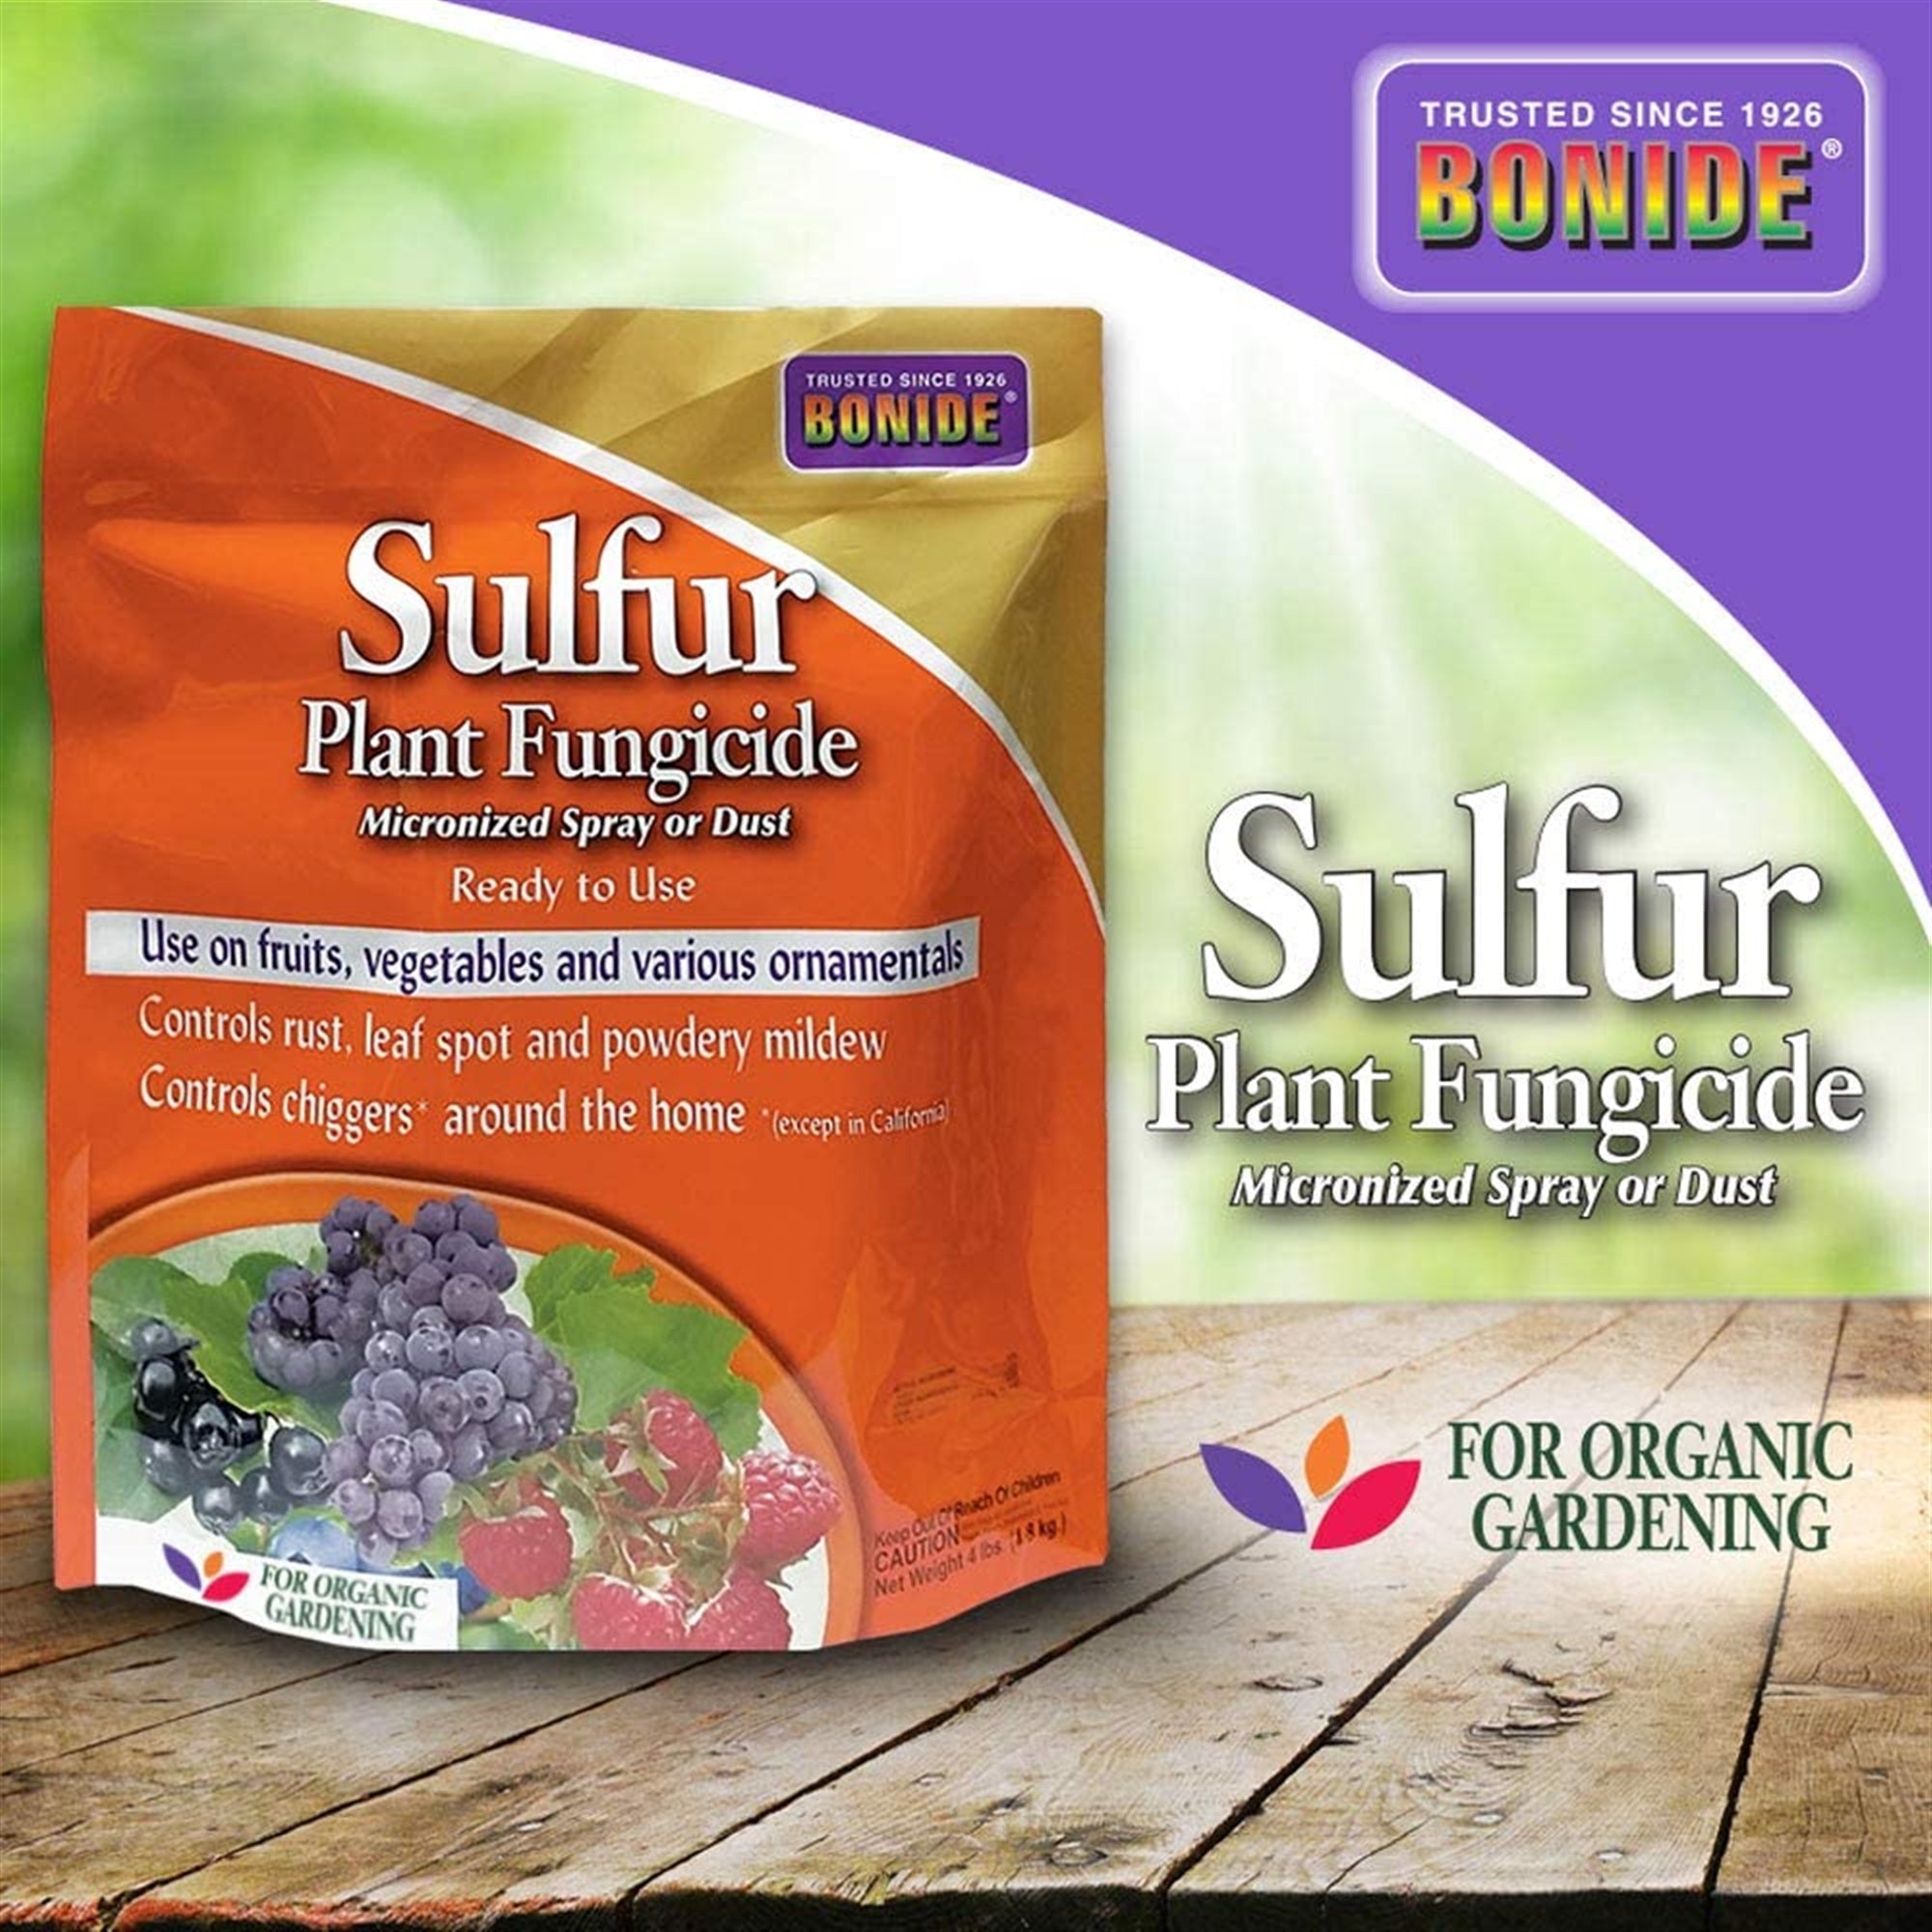 Bonide Sulfur Plant Fungicide Organically Controls Rust Leaf Spot and Powdery Mildew (4 lb.)